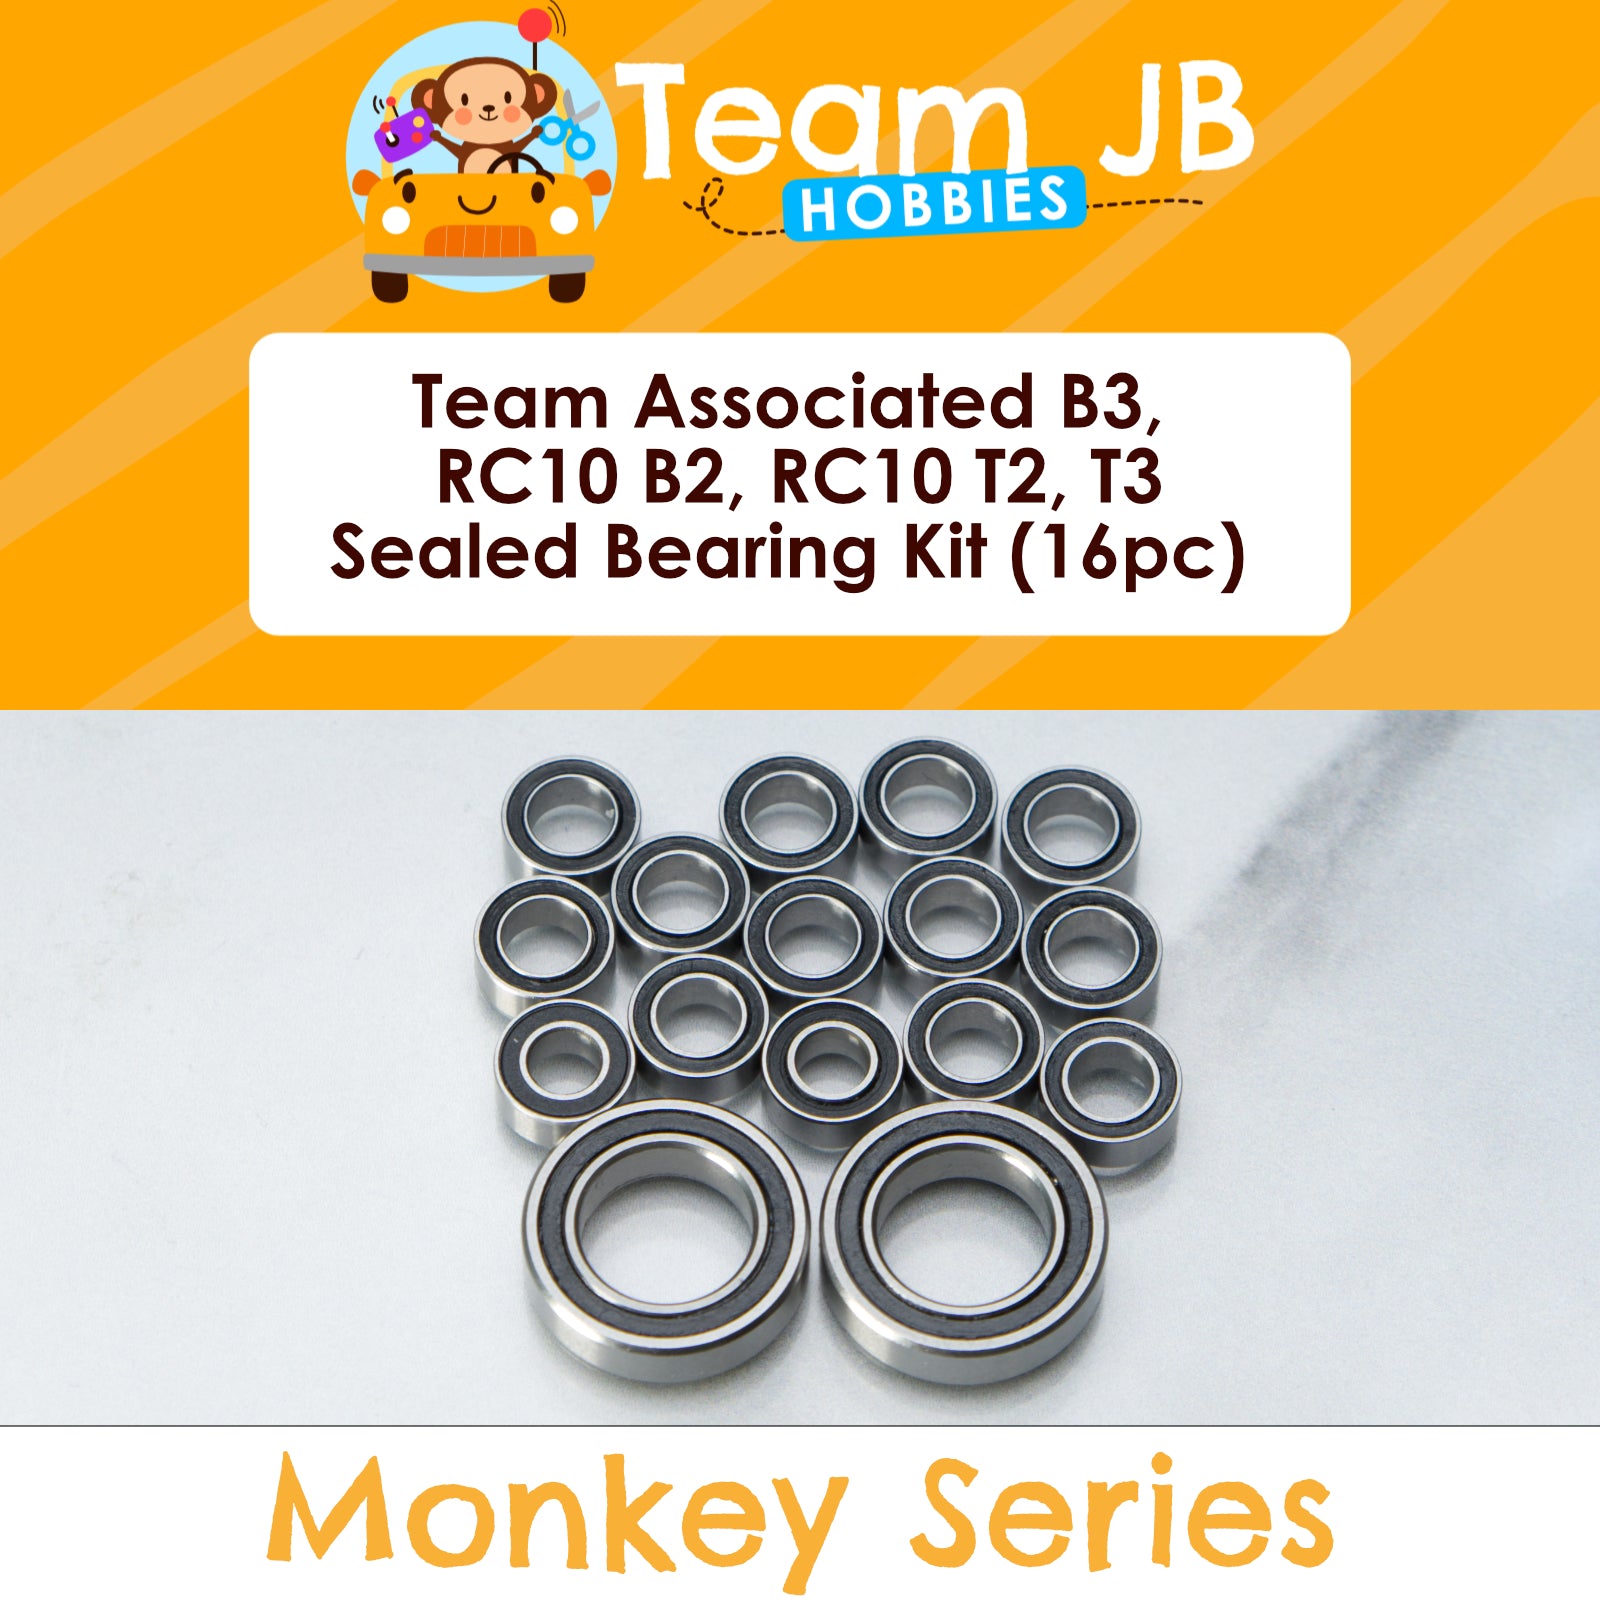 Team Associated B3, RC10 B2, RC10 T2, T3 - Sealed Bearing Kit